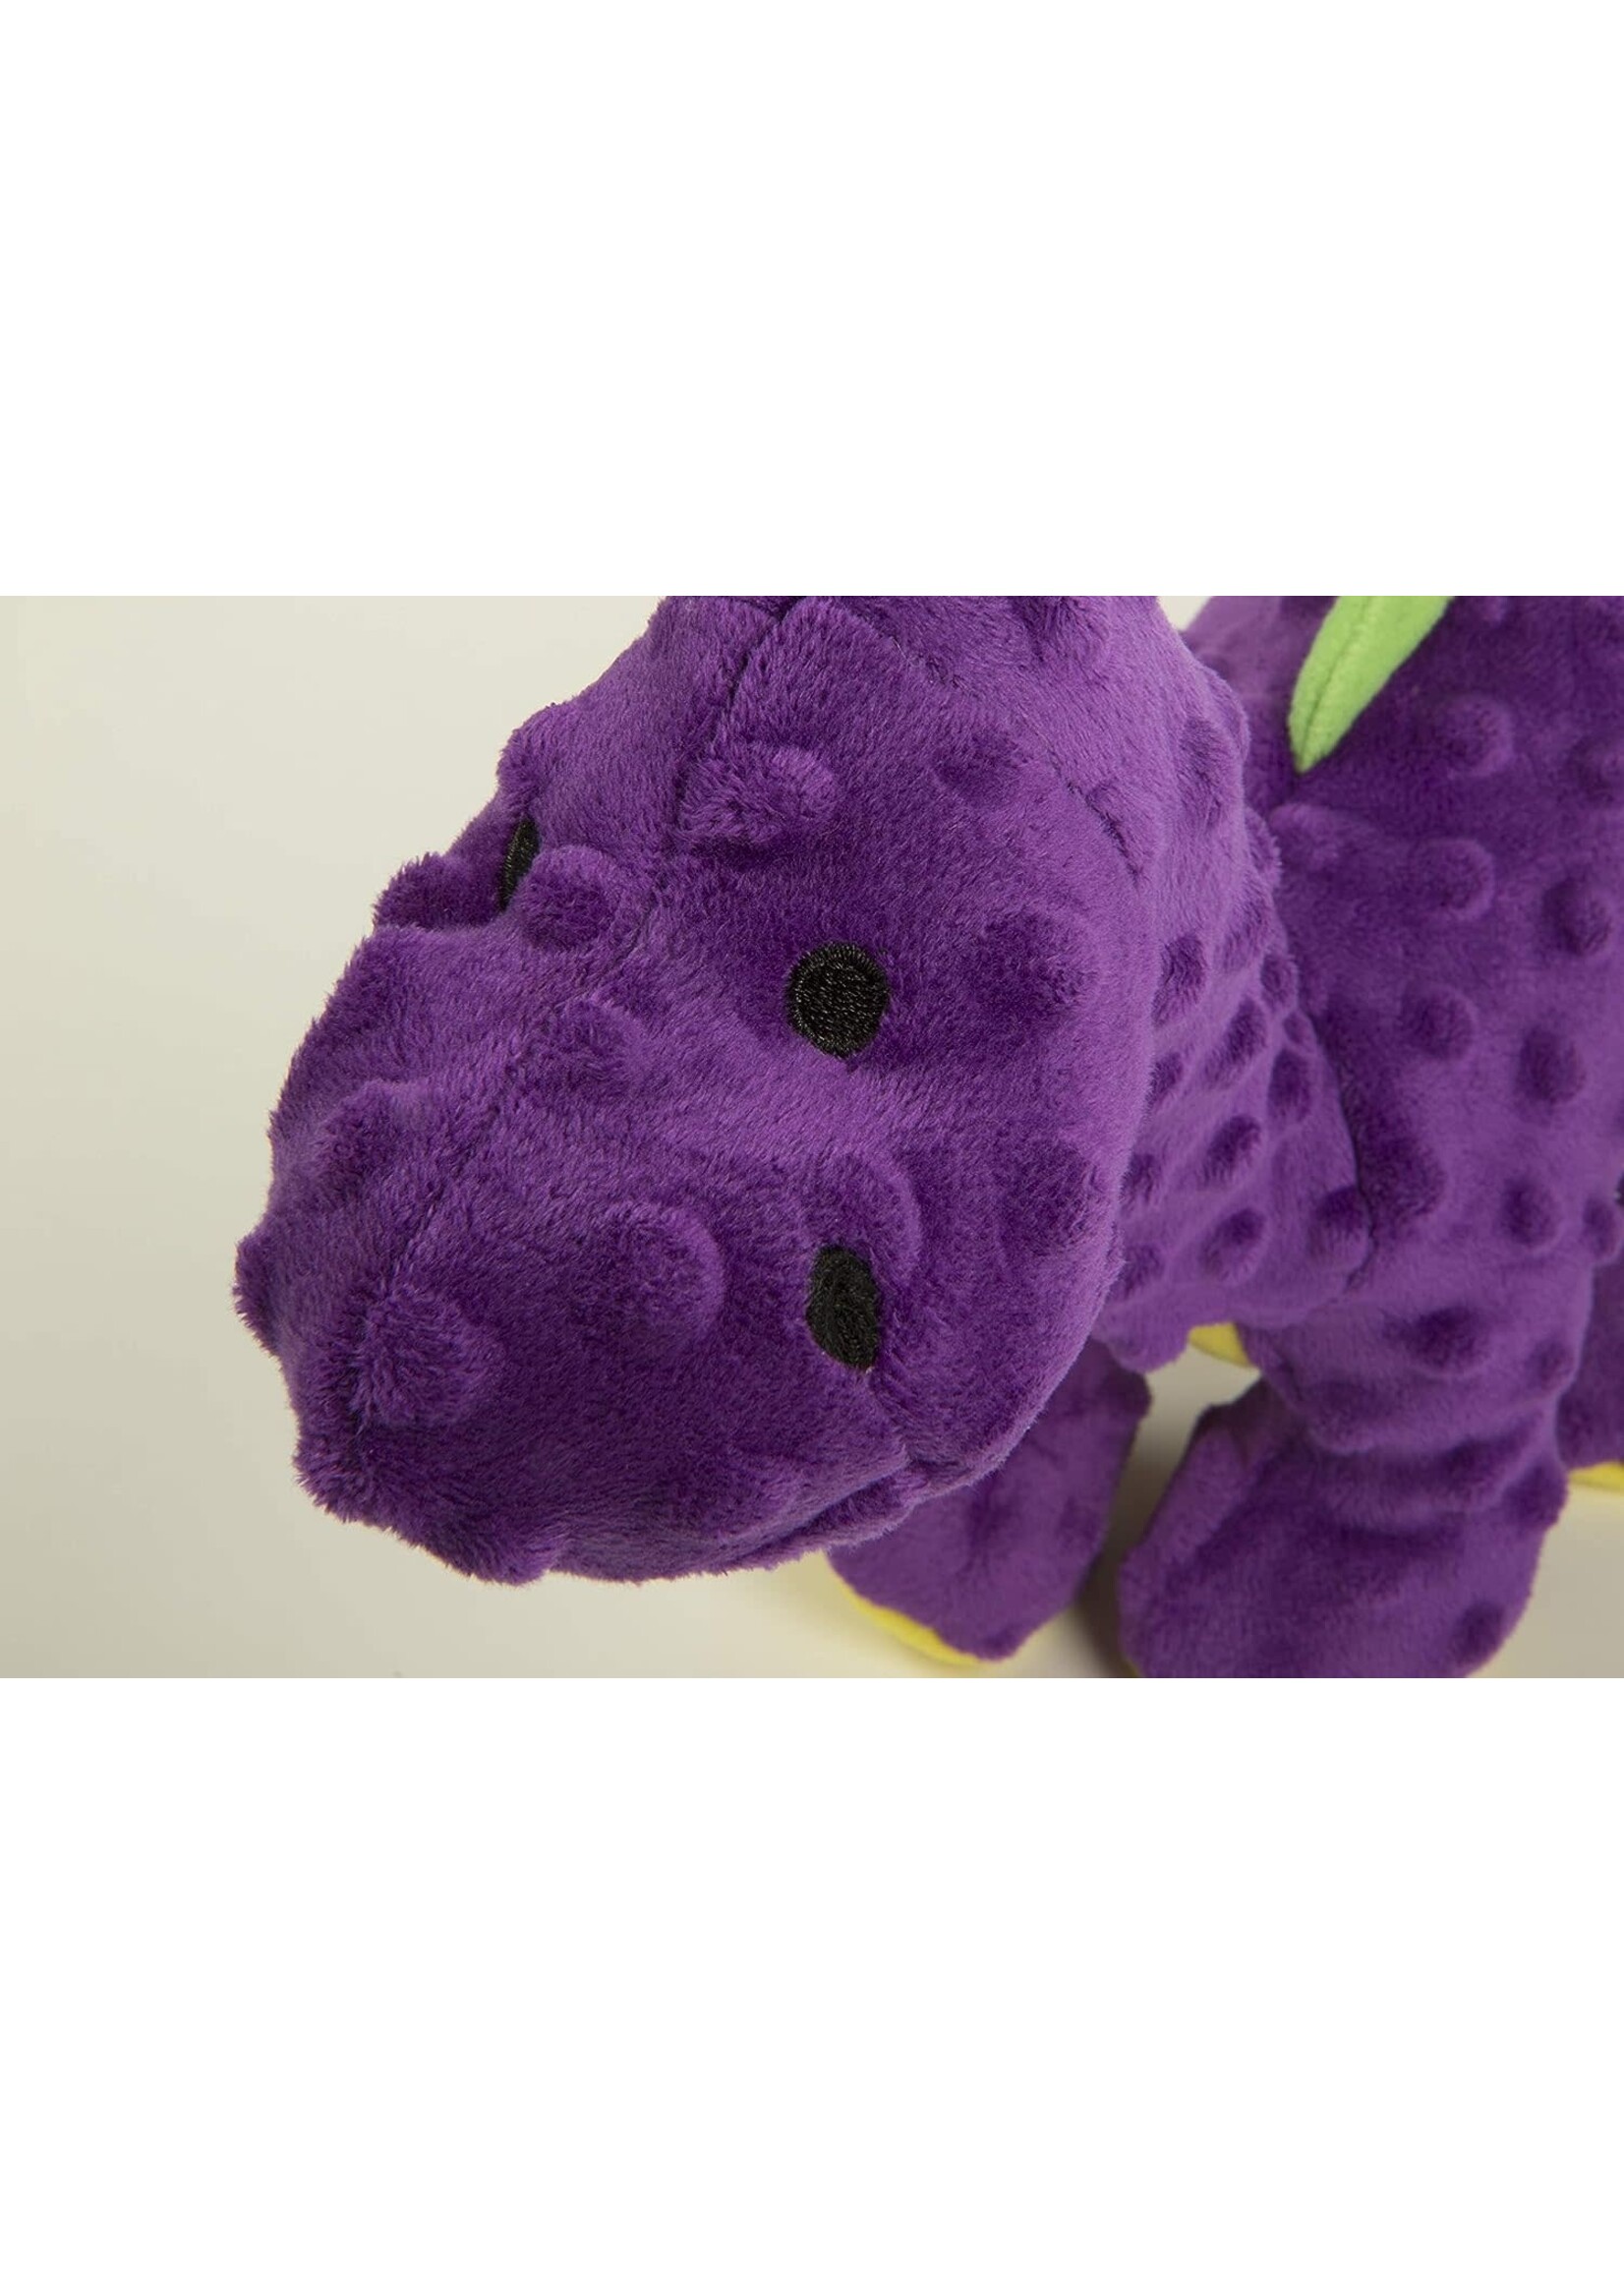 goDog Bruto Dino Purple Large Chew Guard Plush Dog Toy